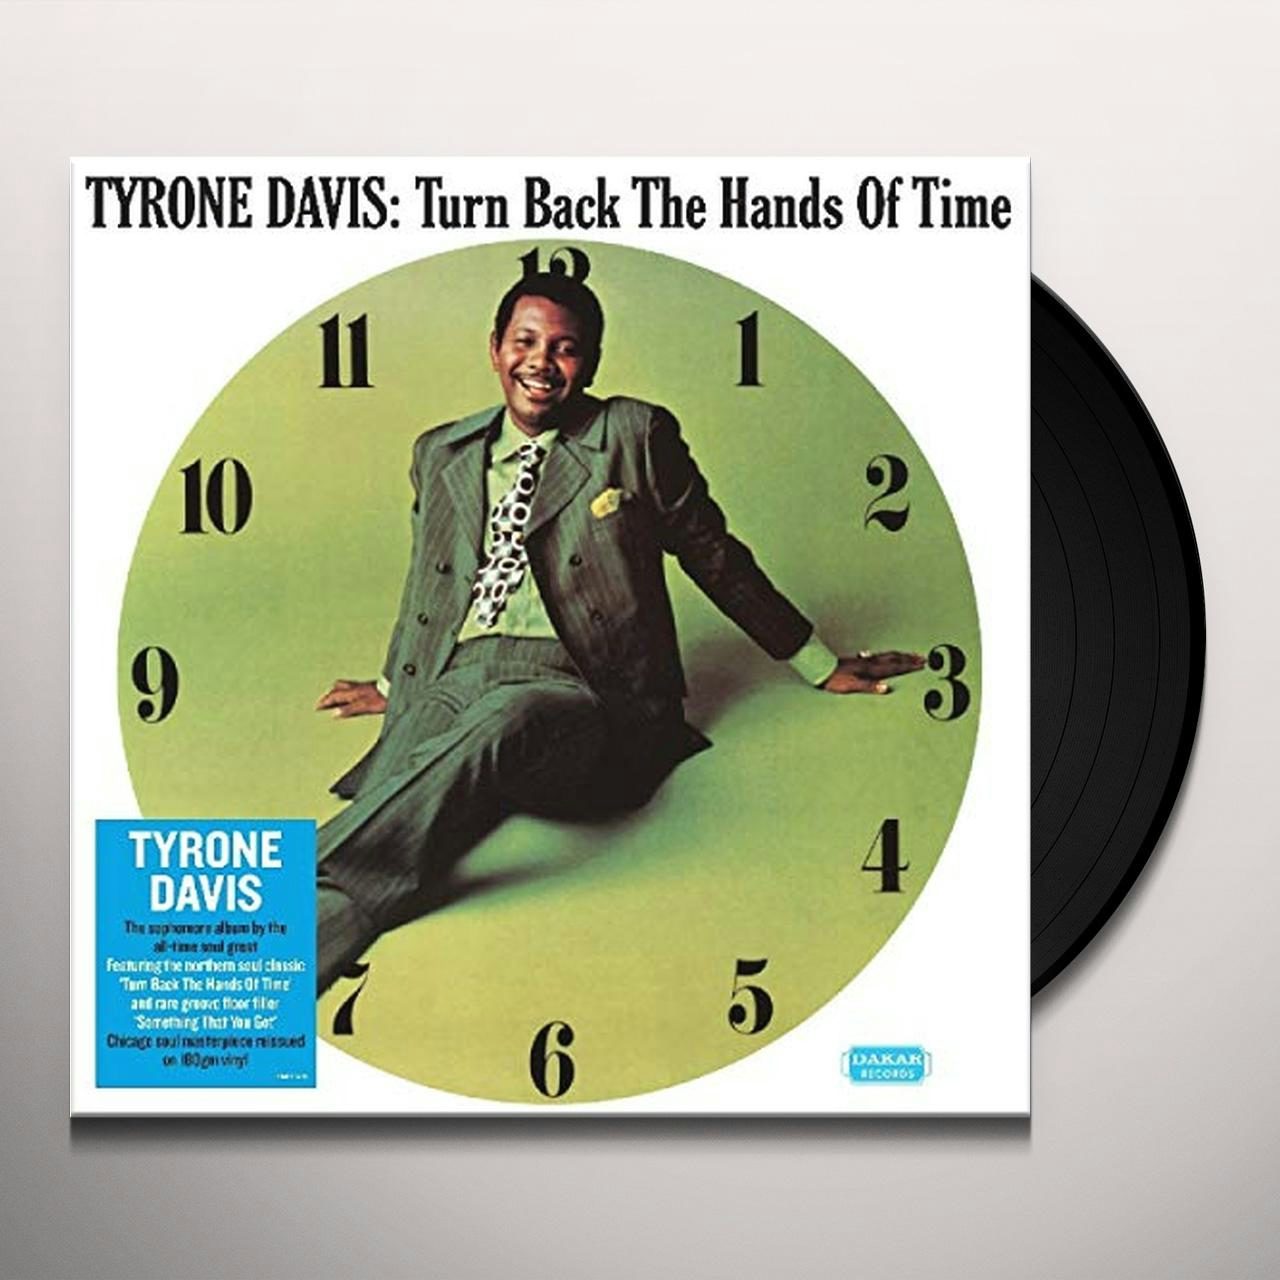 Tyrone Davis. Hands of time. Tyrone Davis album something good. Tyrone Davis album the Tyrone Davis story.